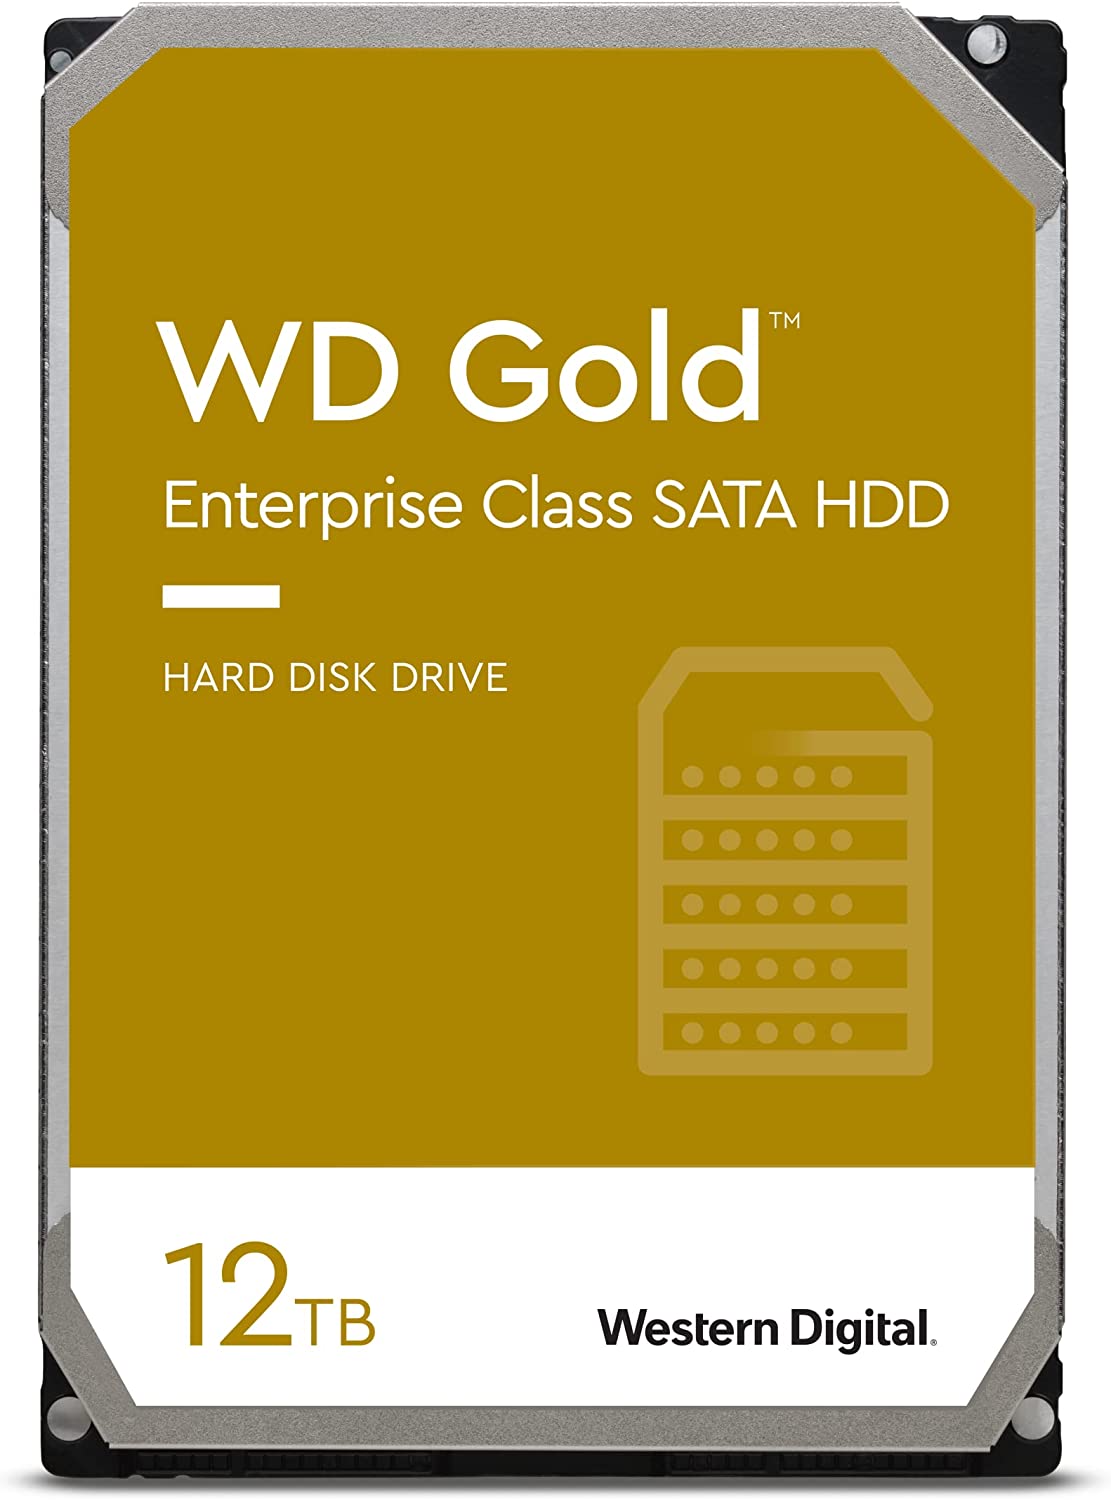 Storage - Internal Disk/Western Digital: Western, Digital, 12TB, WD, Gold, Enterprise, Class, Internal, Hard, Drive, -, 3.5, SATA, 6Gb/s, 512e, -Speed:, 7, 200RPM, -, 5, Years, Lim, 